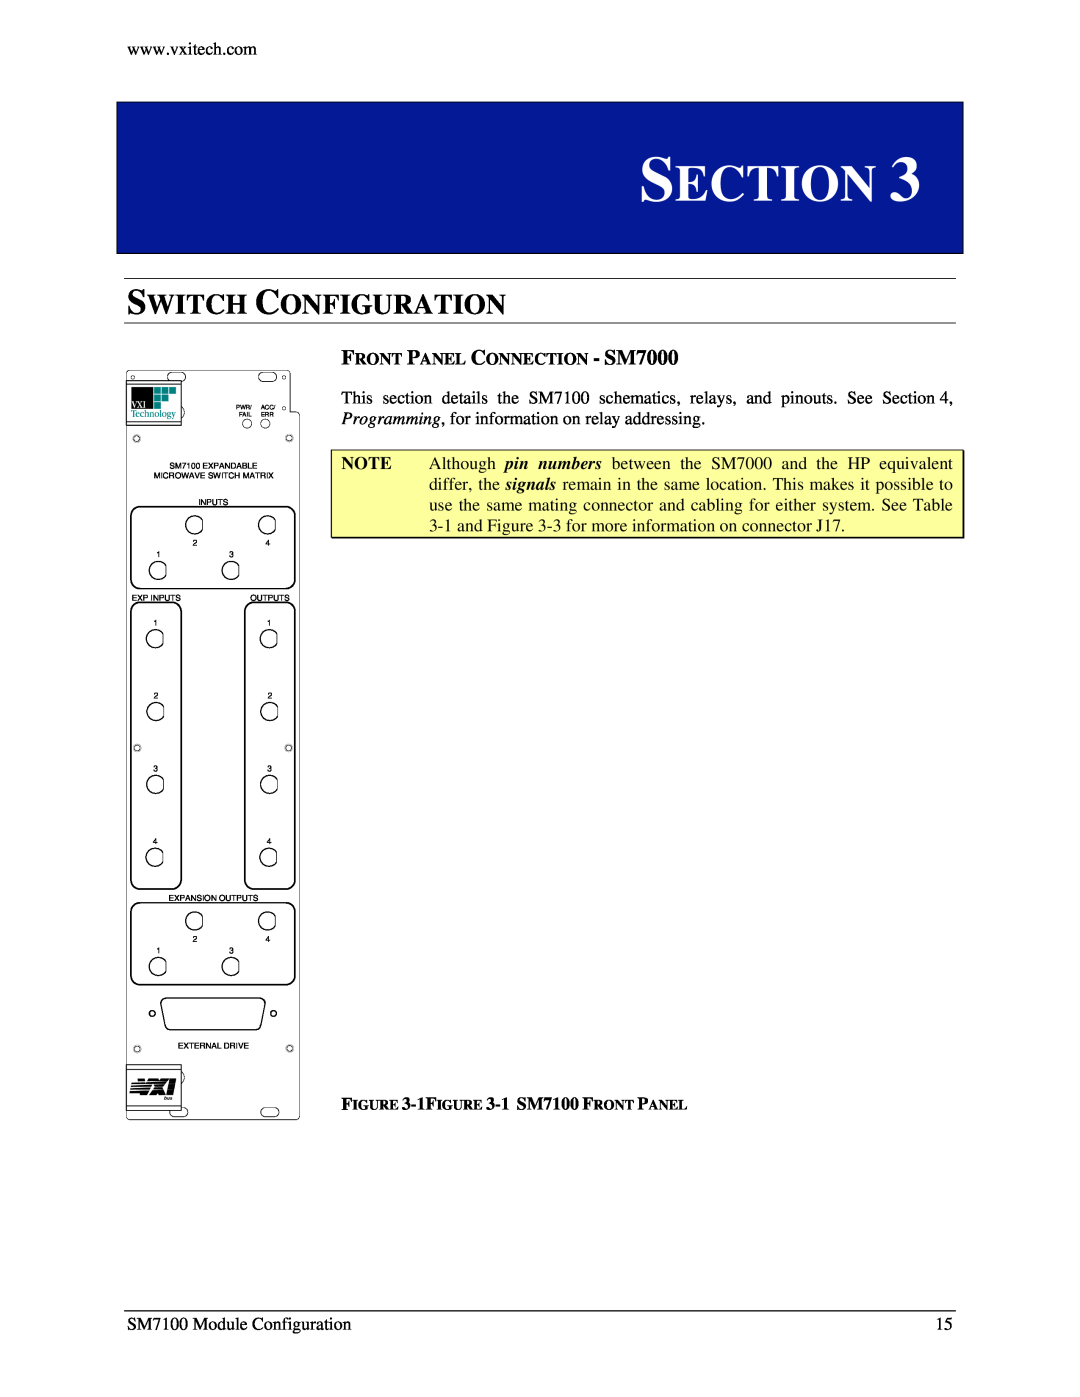 VXI SM7100, Microwave Matrix user manual Switch Configuration, Section, FRONT PANEL CONNECTION - SM7000 